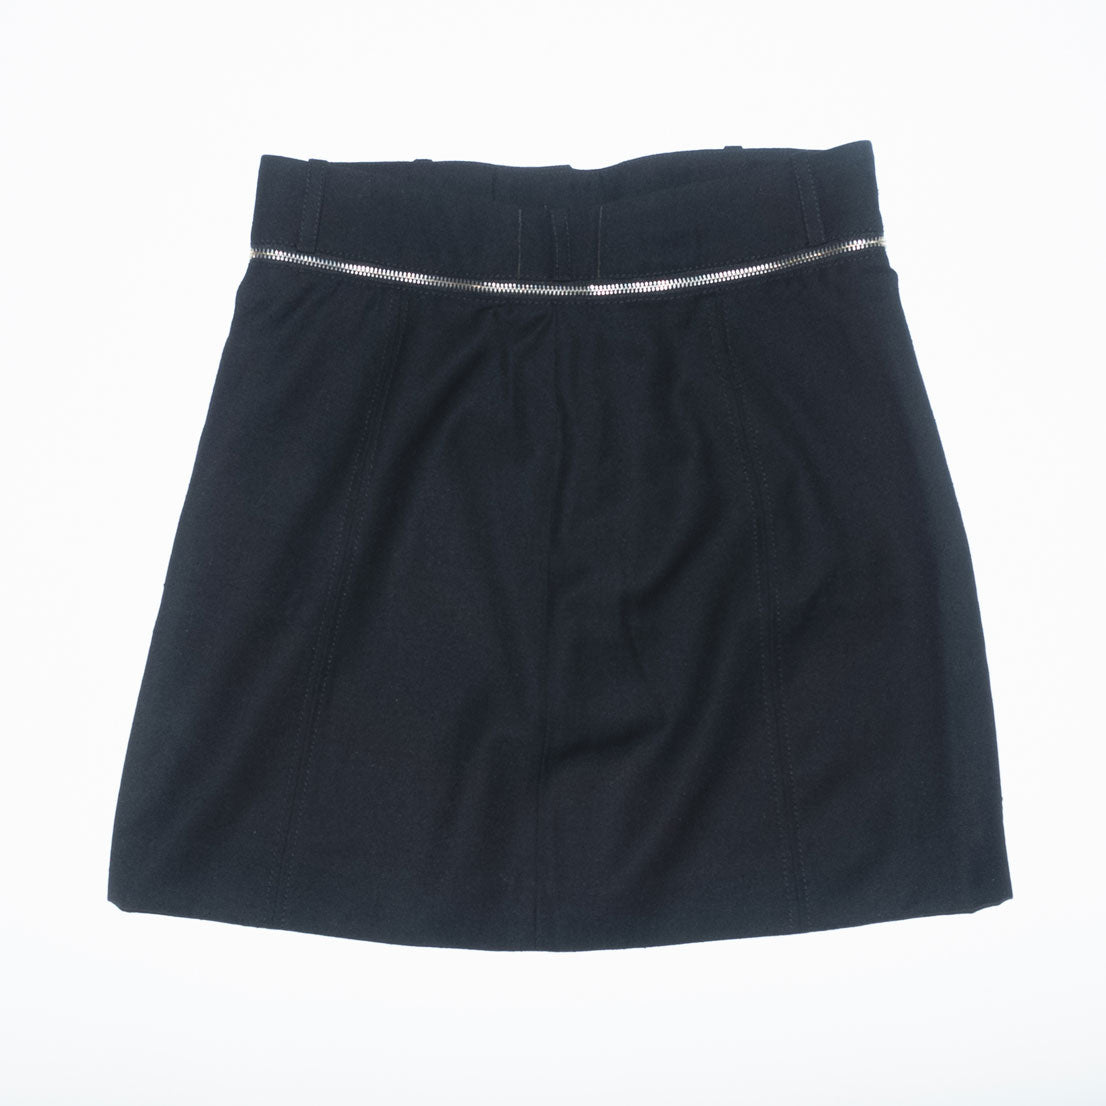 Runway Mini Skirt with Horizontal Hip Zippers in Black